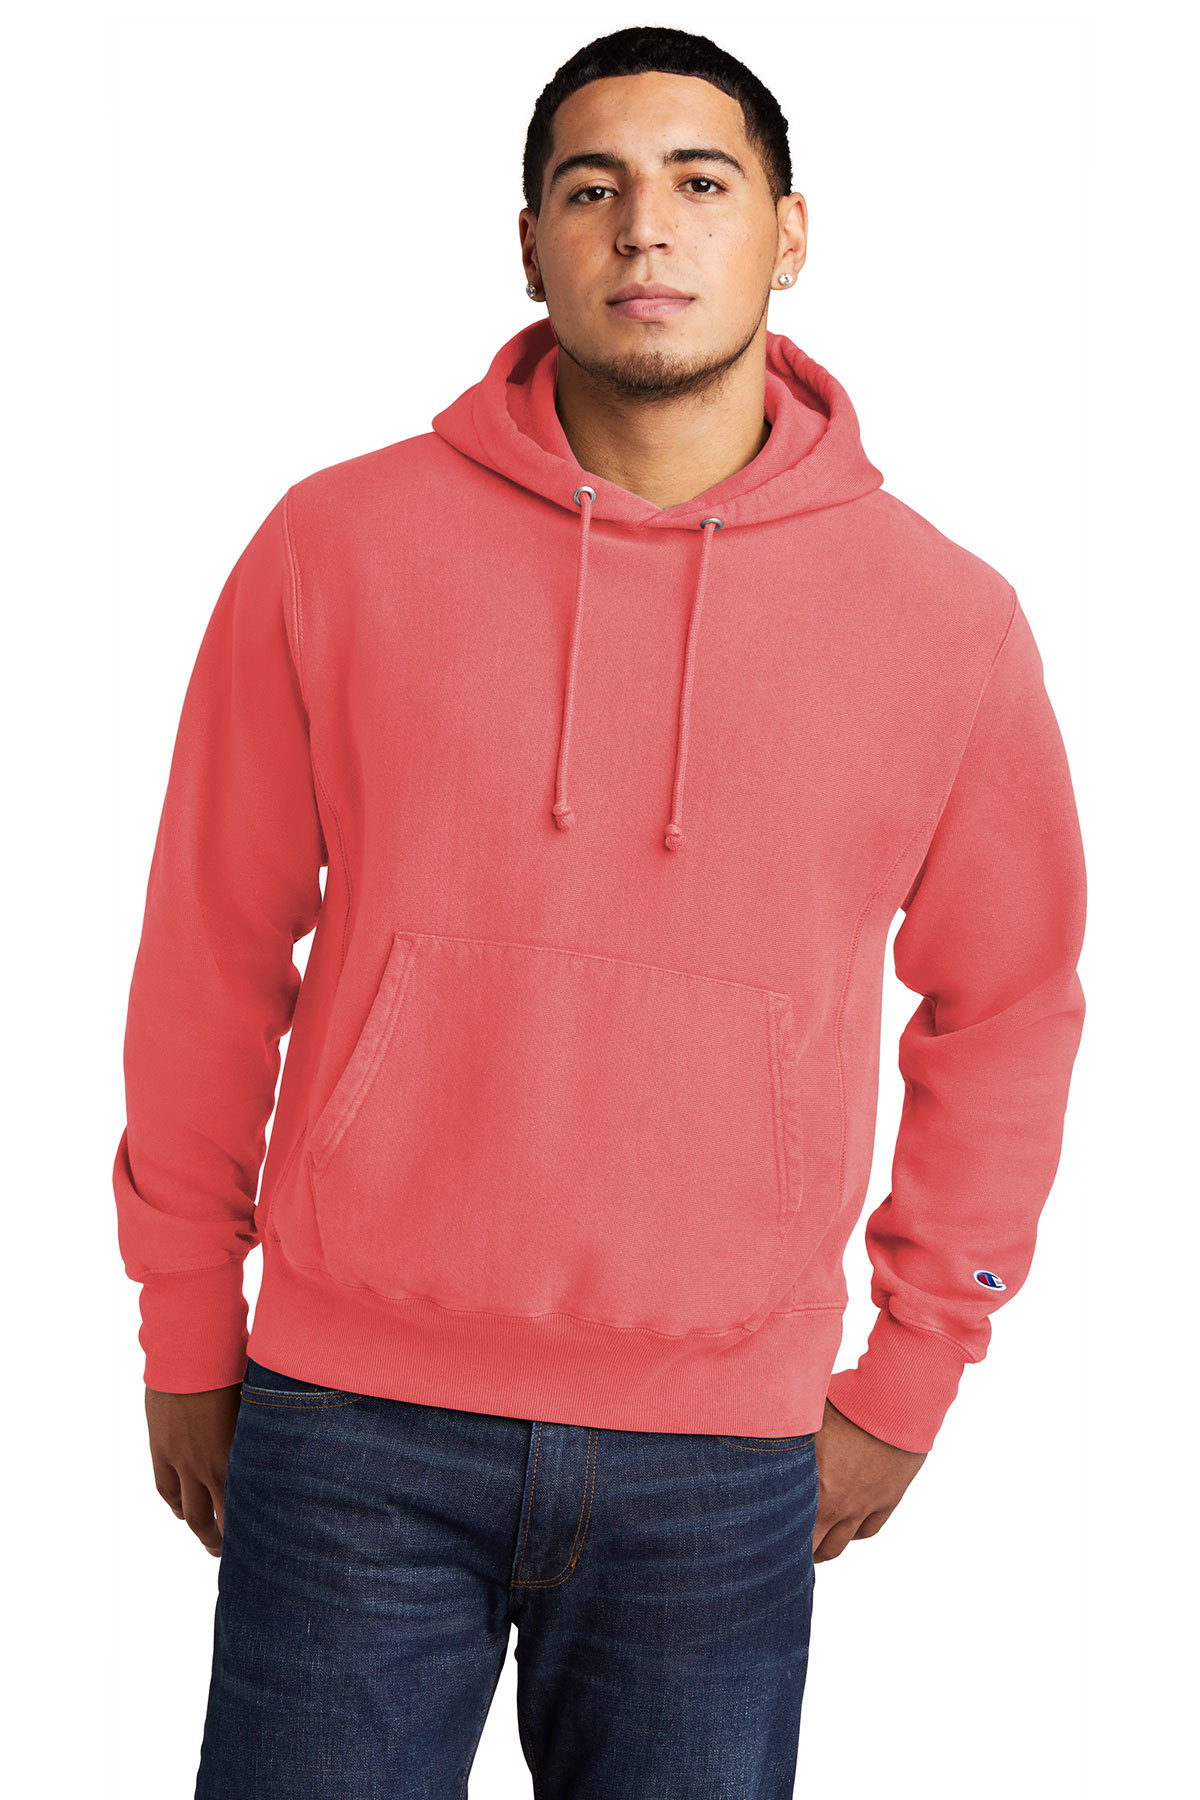 Champion GDS10 - Garment Dyed Reverse Weave Hoodie $41.11 - Sweatshirts